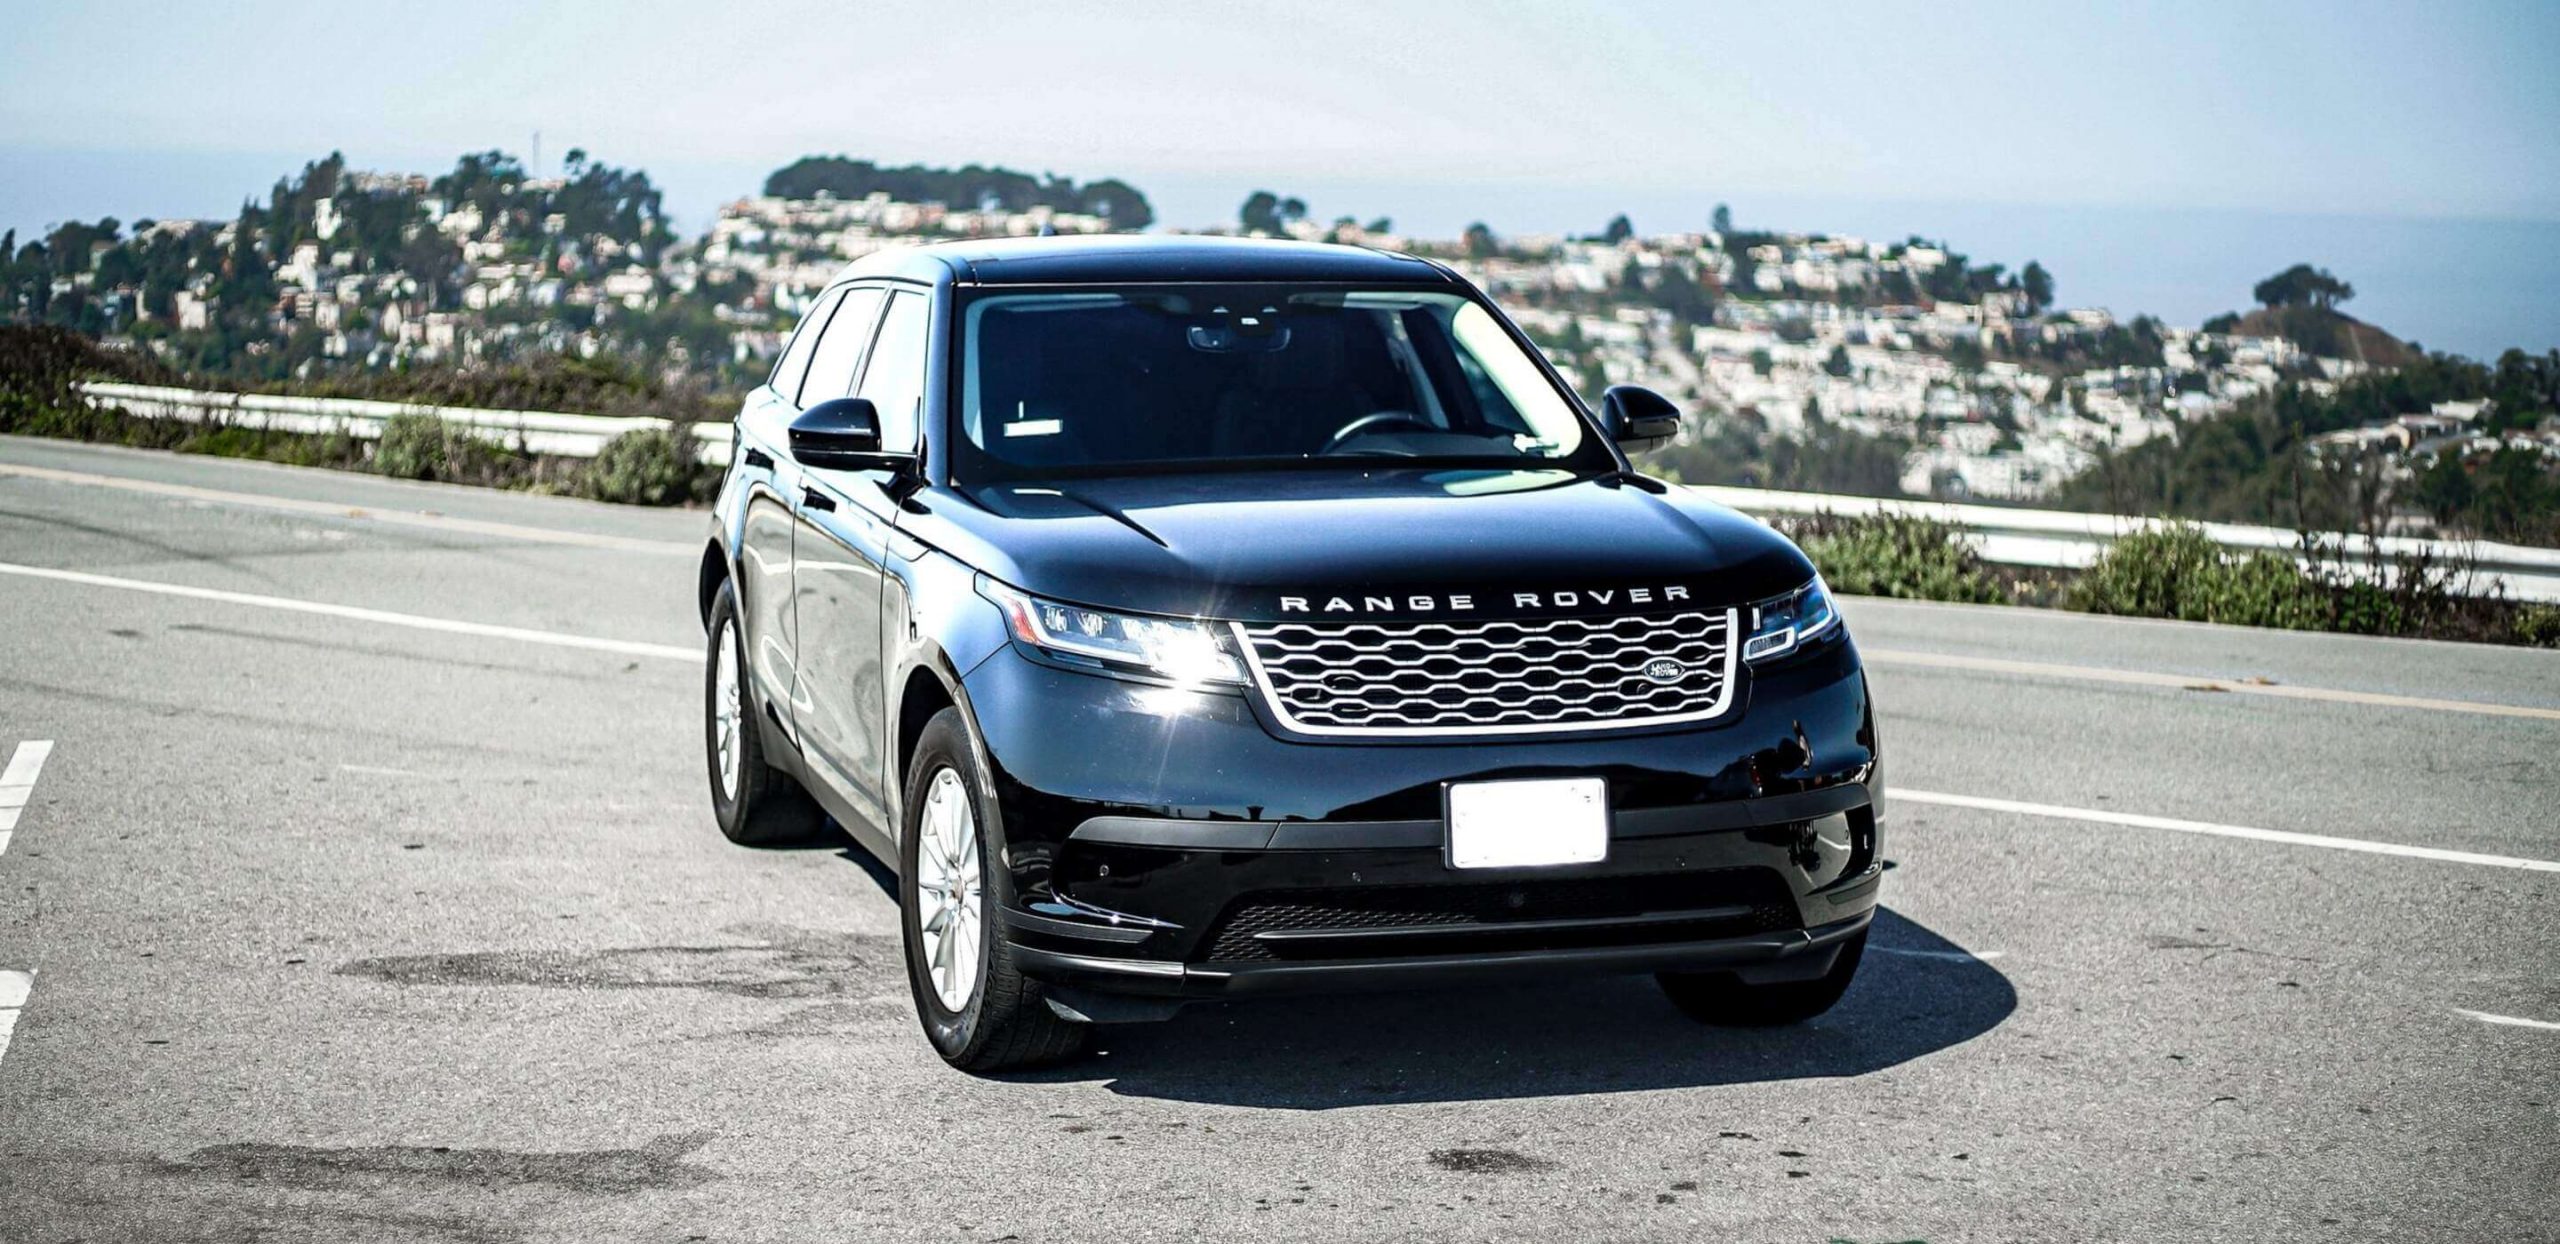 2019-Land-Rover-Range-Rover-Velar-black-featured-image